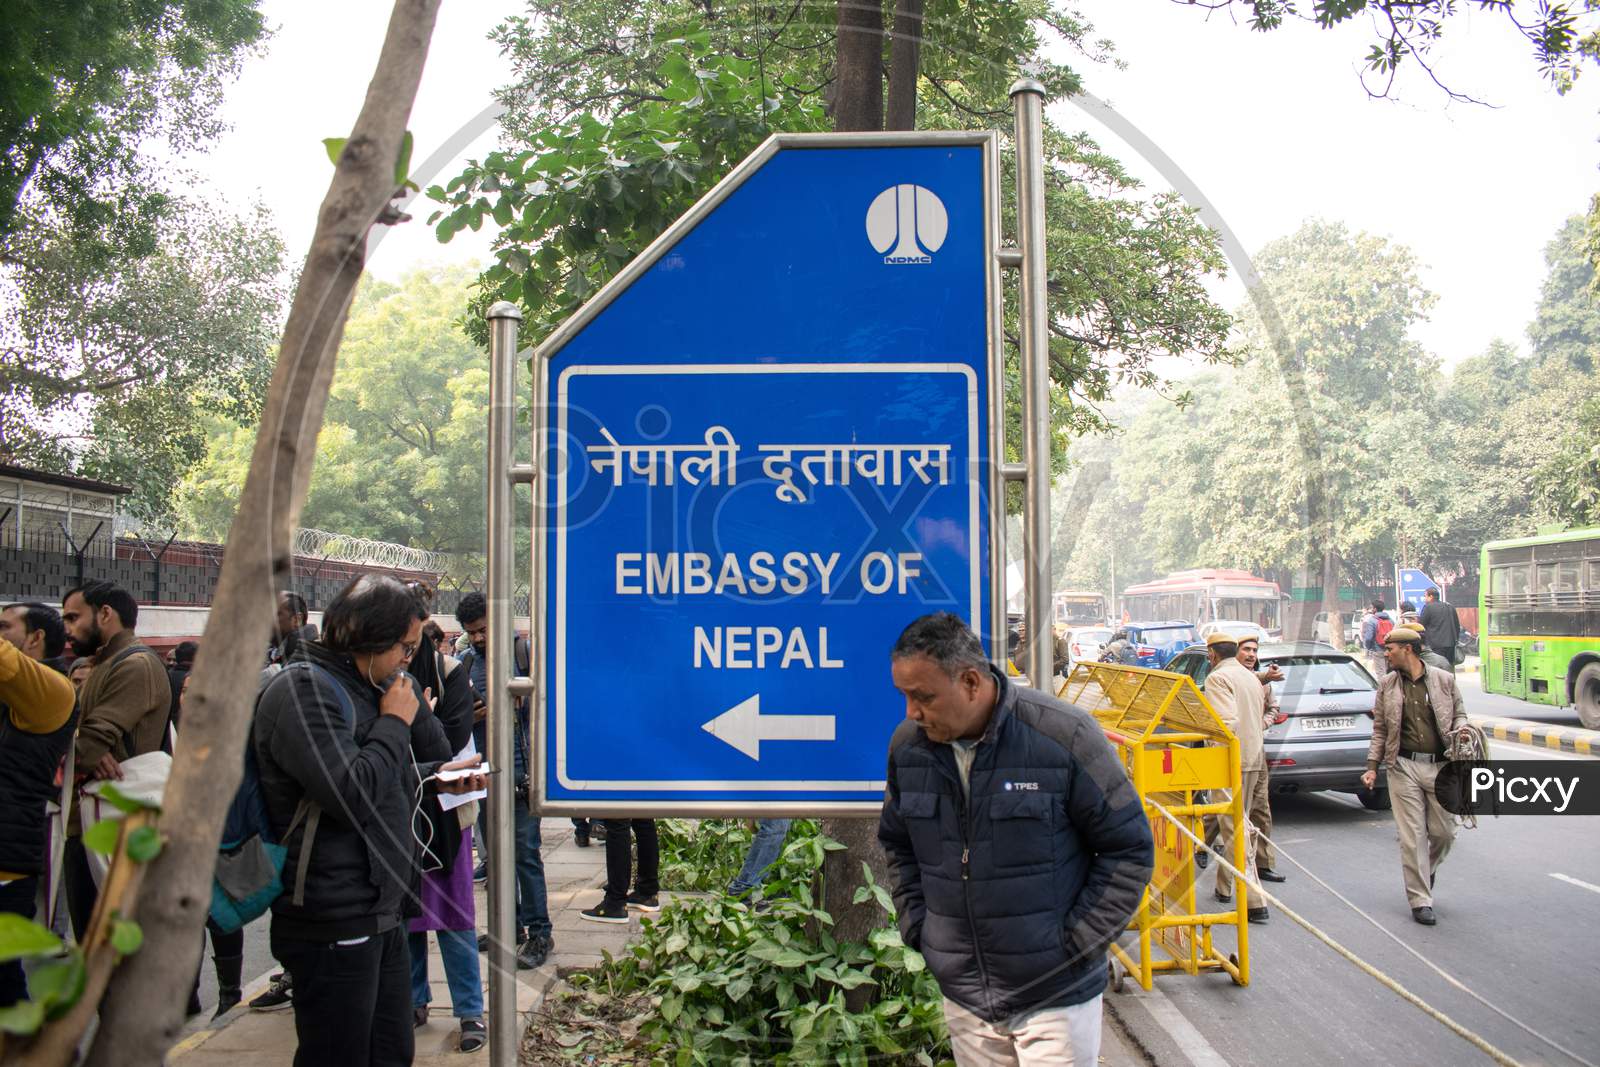 Embassy of Nepal, New Delhi